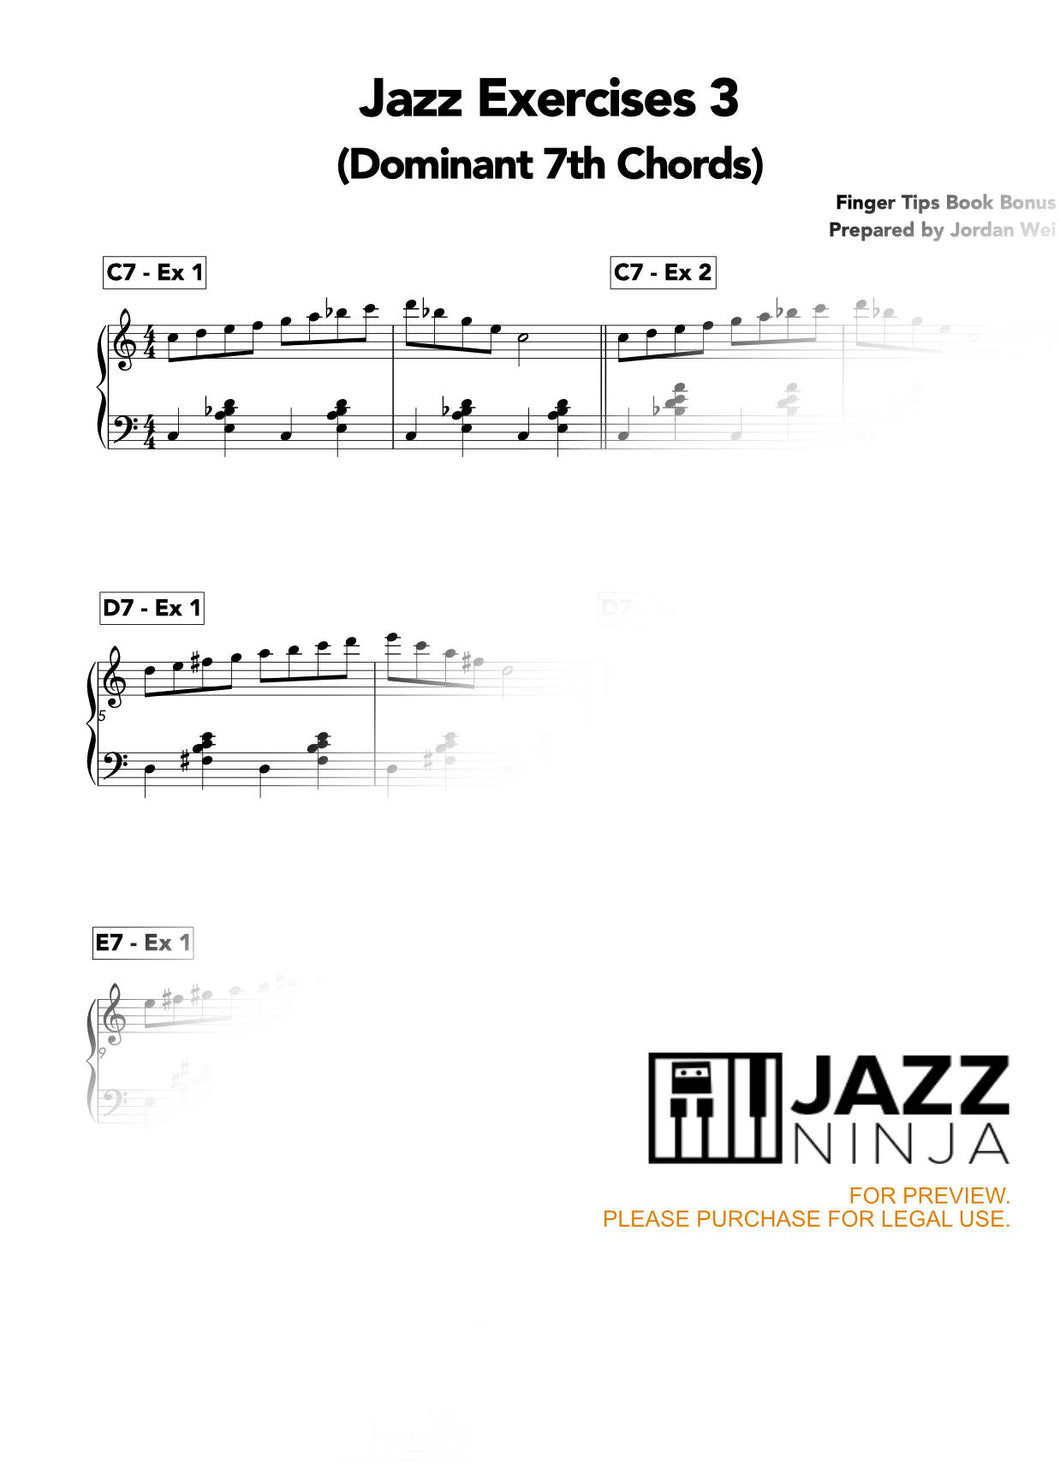 Jazz Exercises 3 (Dominant 7th chords)